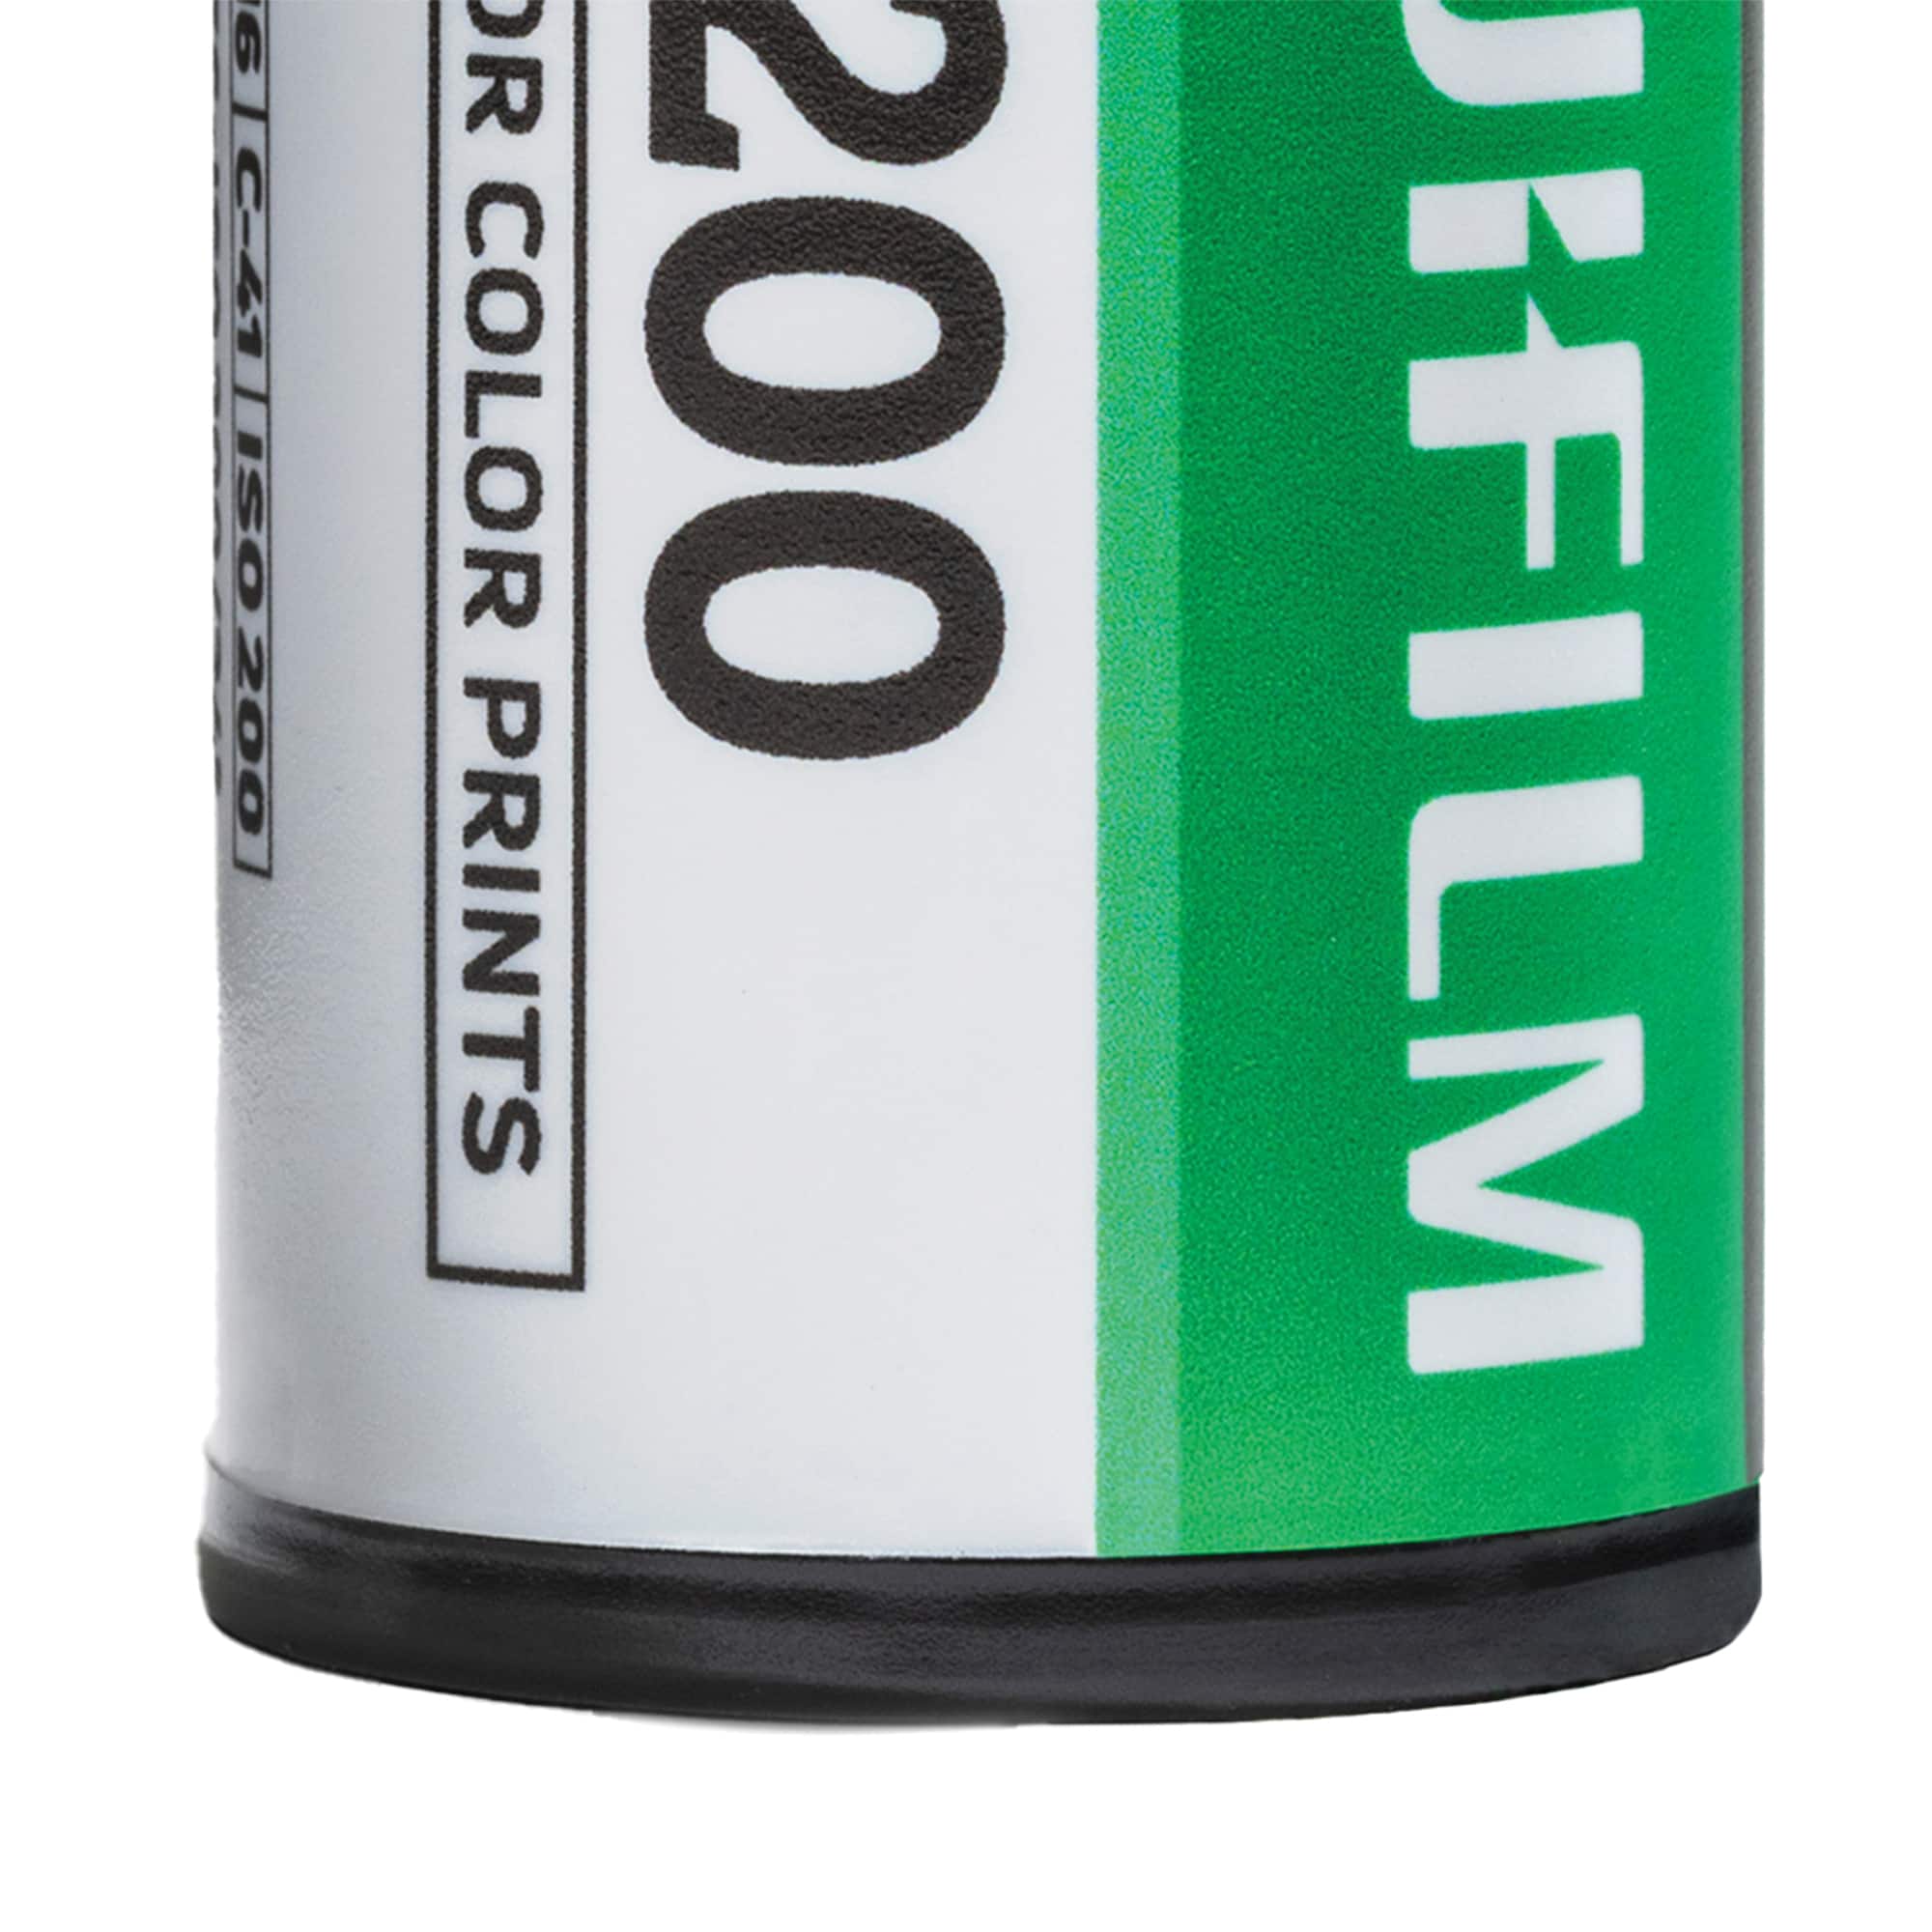 Fujifilm ISO 200 Color Negative Film